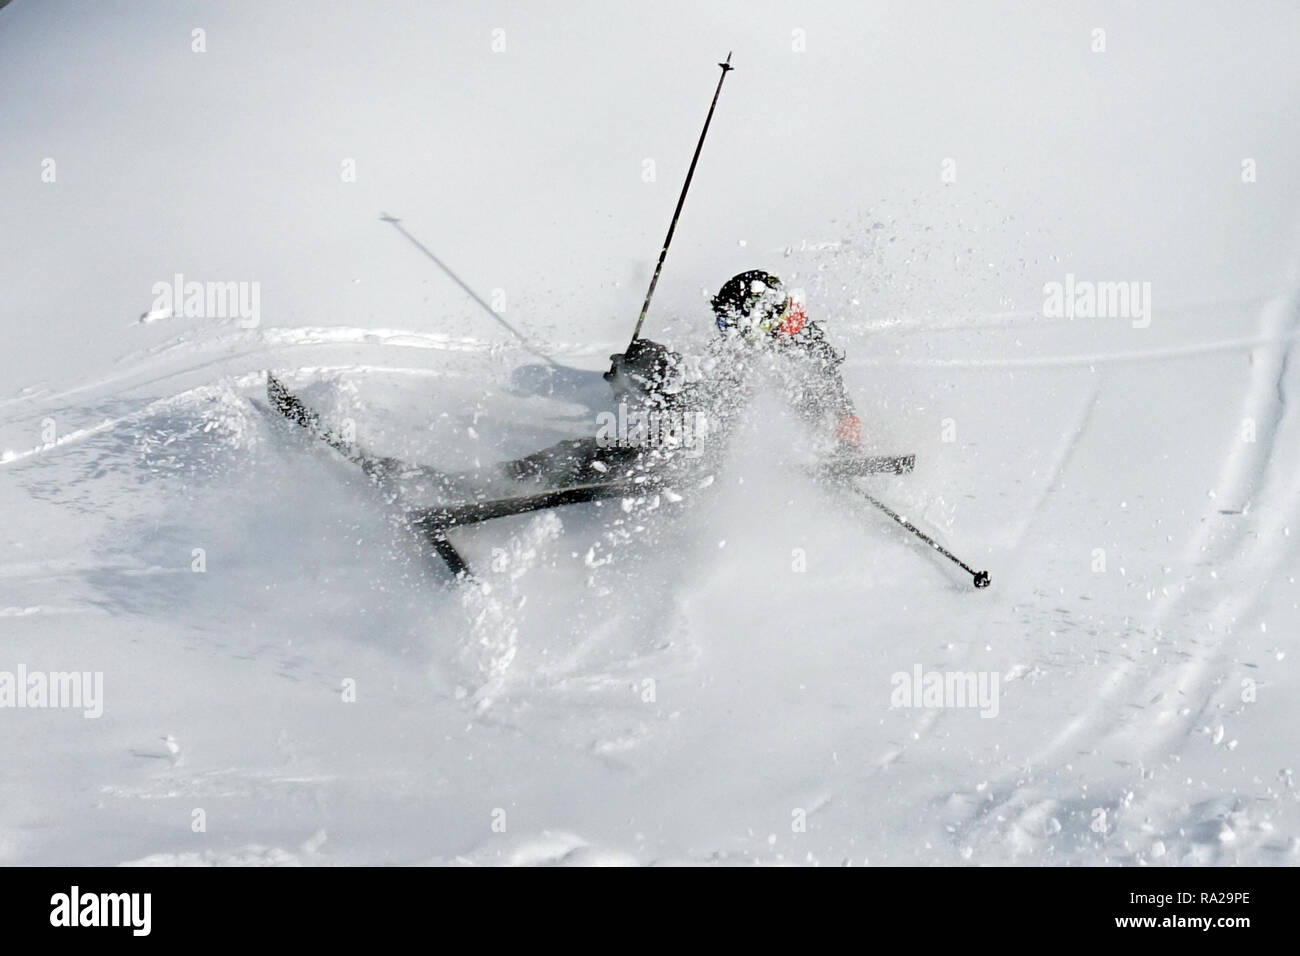 05.02.2018, Suedtirol, Reischach, Italien, Junge stuerzt beim Skifahren. 00S180205D045CARO.JPG [MODEL RELEASE: YES, PROPERTY RELEASE: NOT APPLICABLE ( Stock Photo